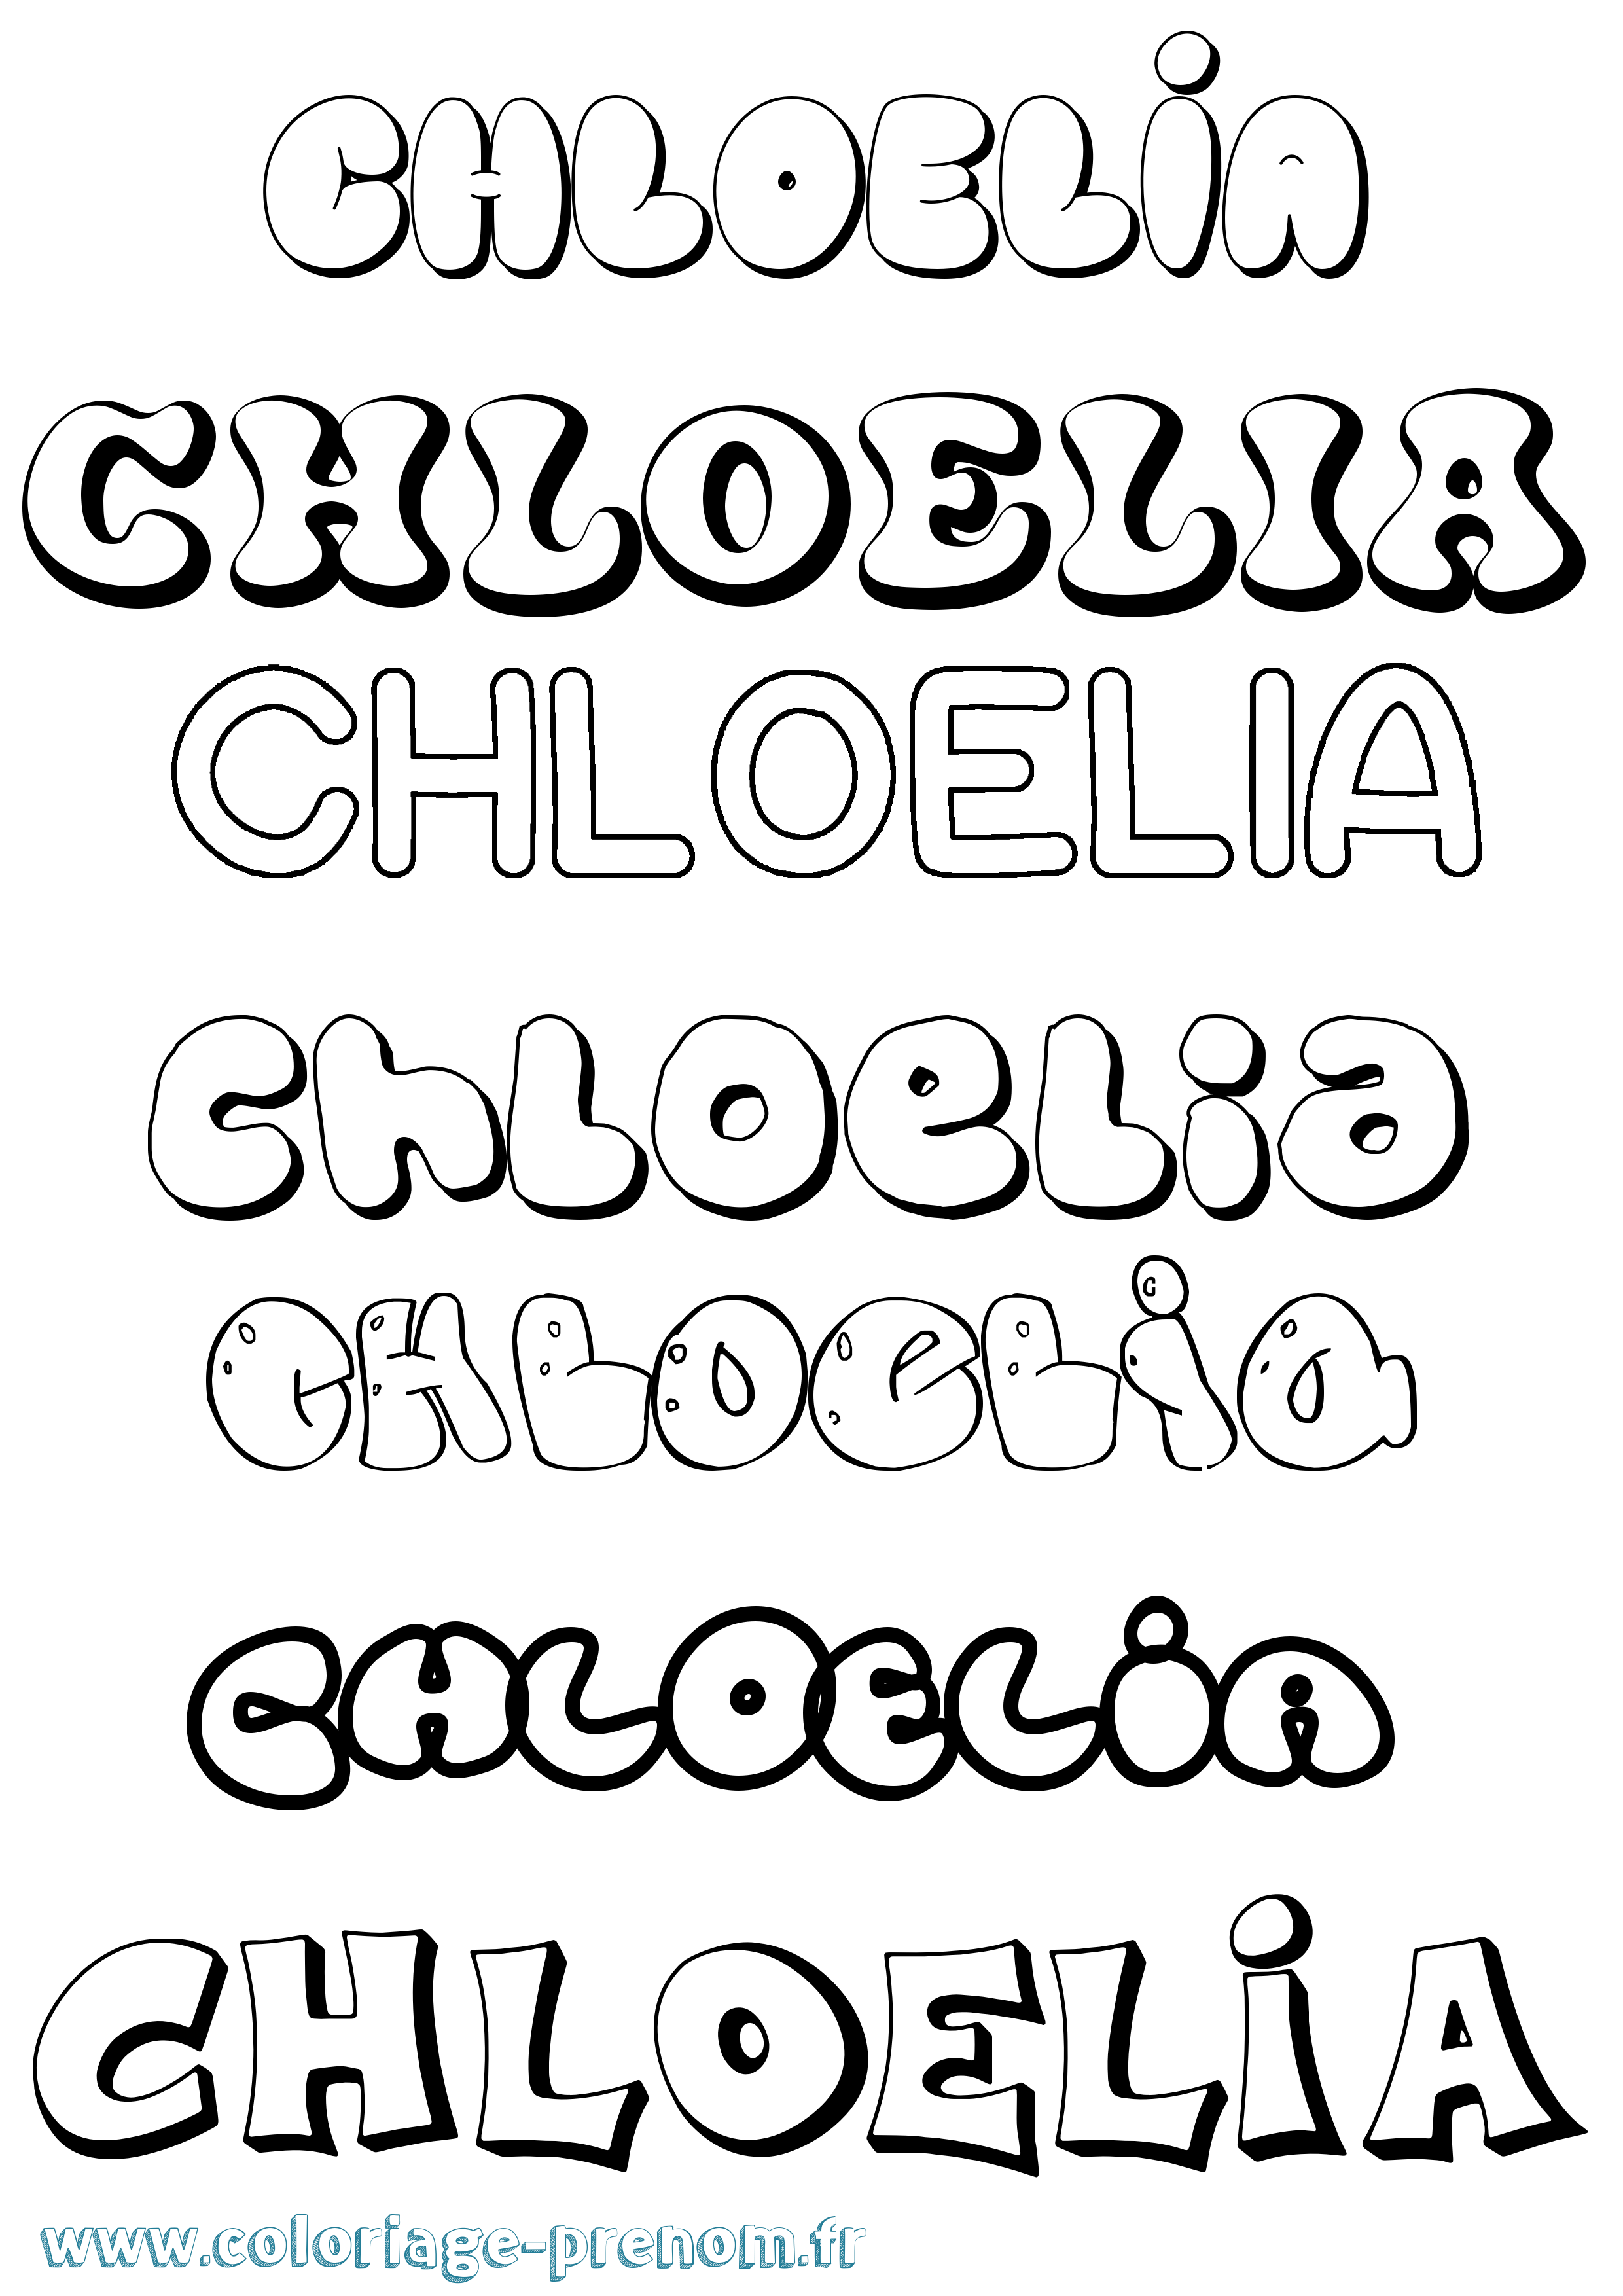 Coloriage prénom Chloelia Bubble